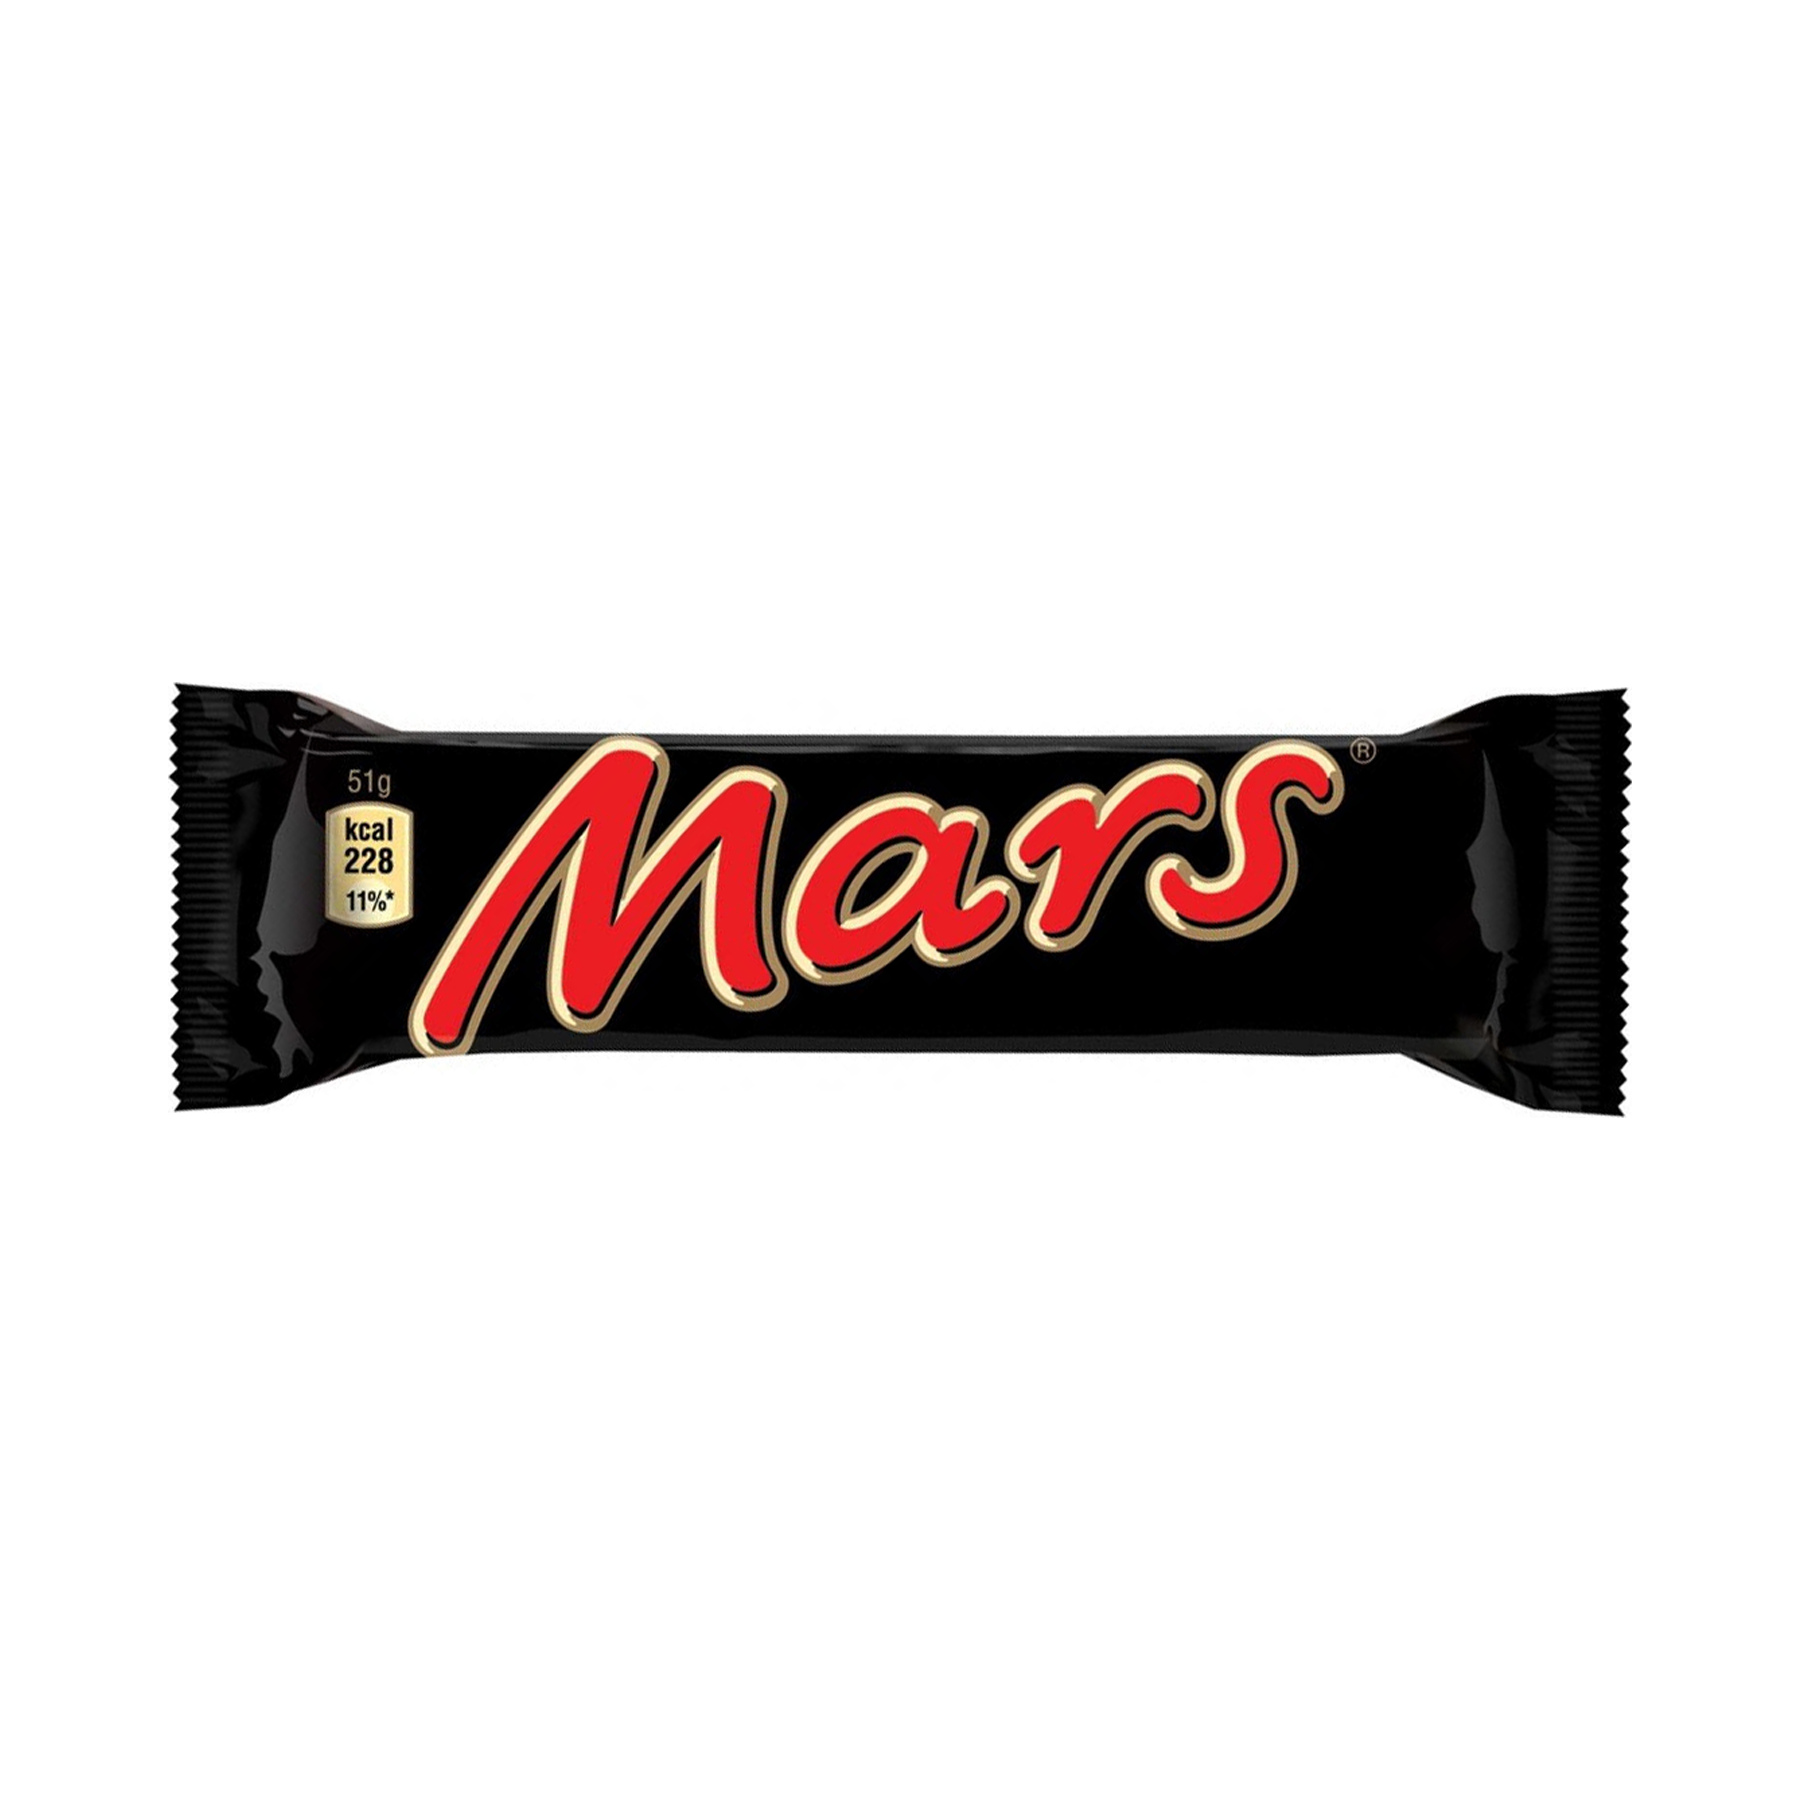 Mars Chocolate Bar (51G)